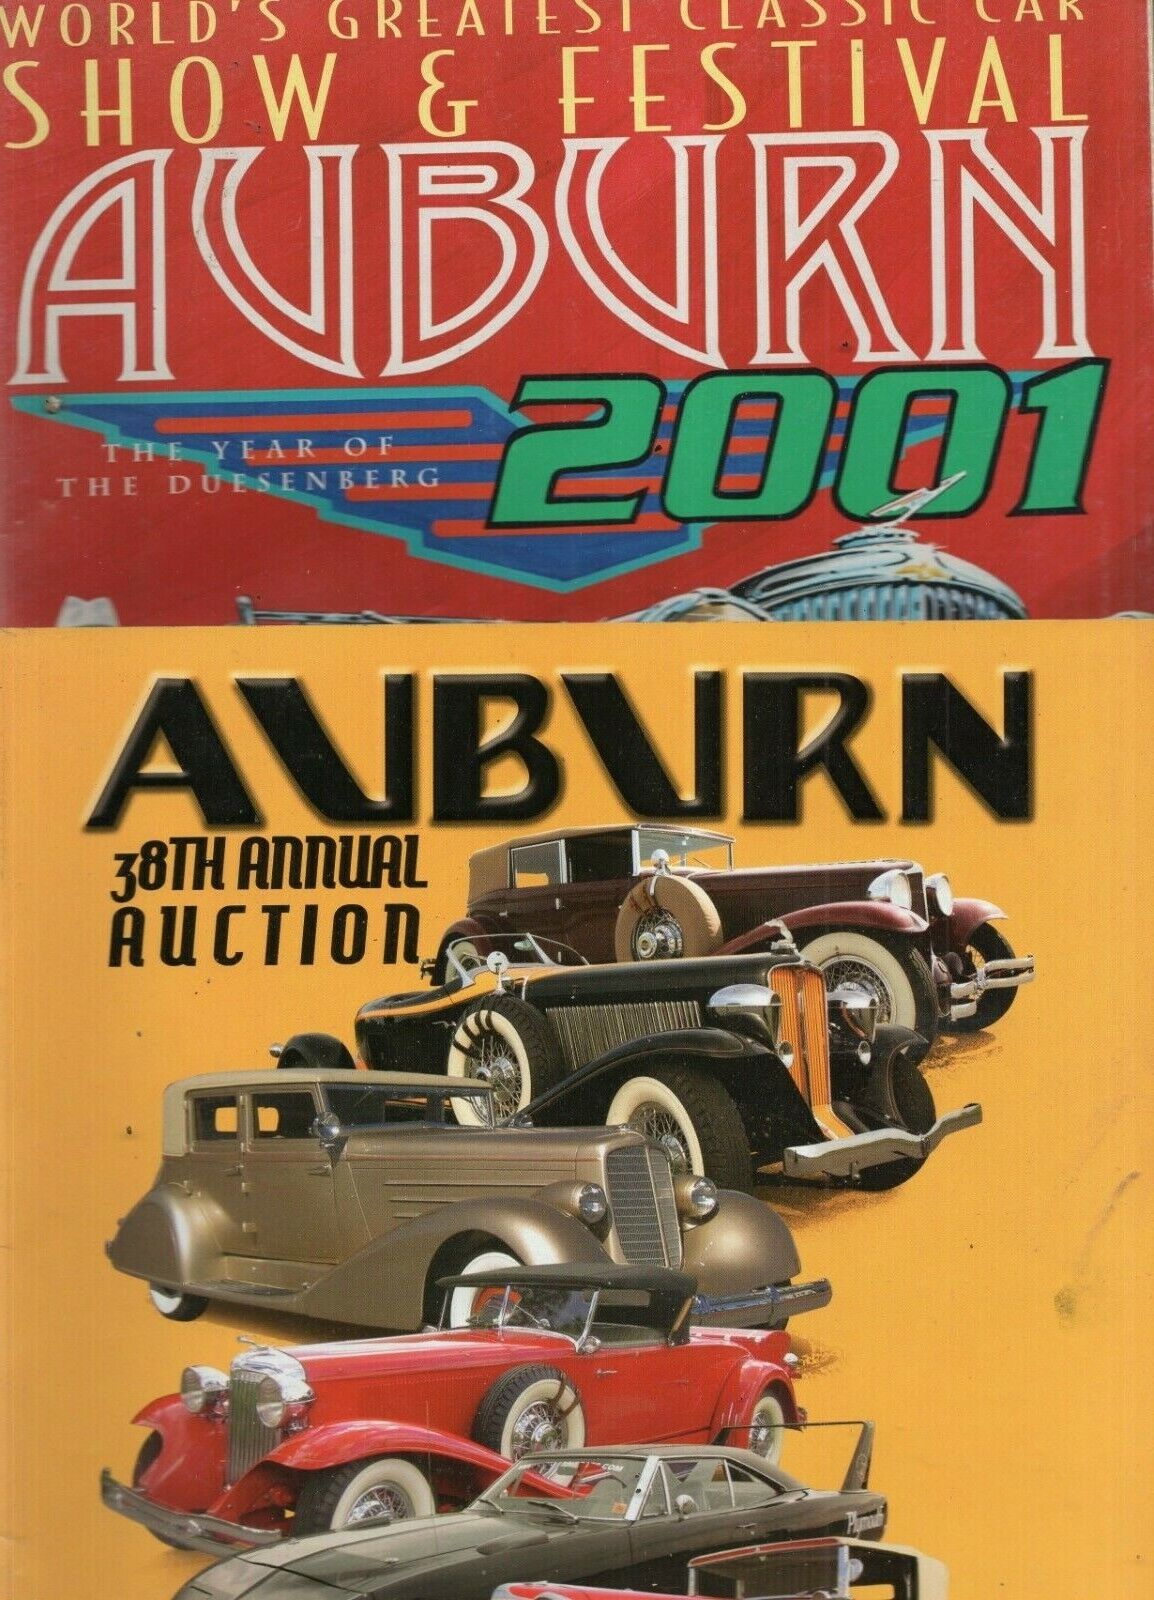 LOT OF 2 2001-2008 AUBURN CLASSIC CAR SHOW & FESTIVAL PROGRAM-AUCTION CATALOG